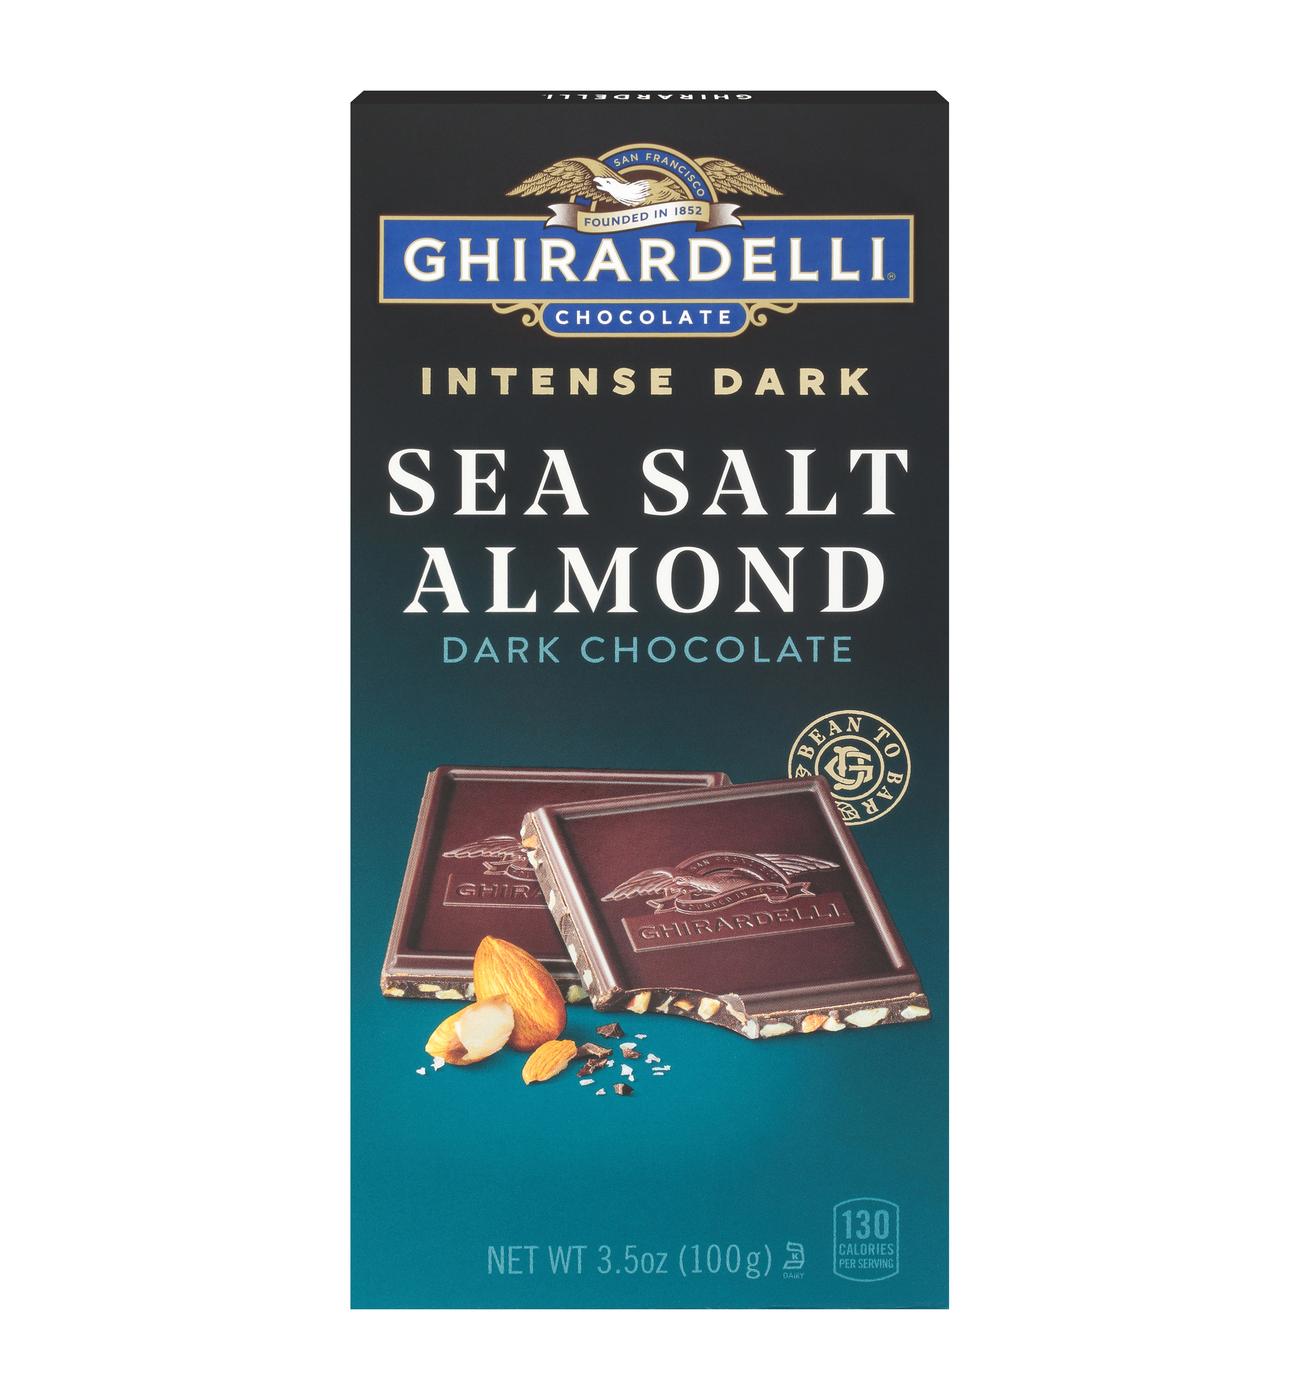 Ghirardelli Intense Dark Sea Salt Almond Chocolate Bar; image 1 of 3